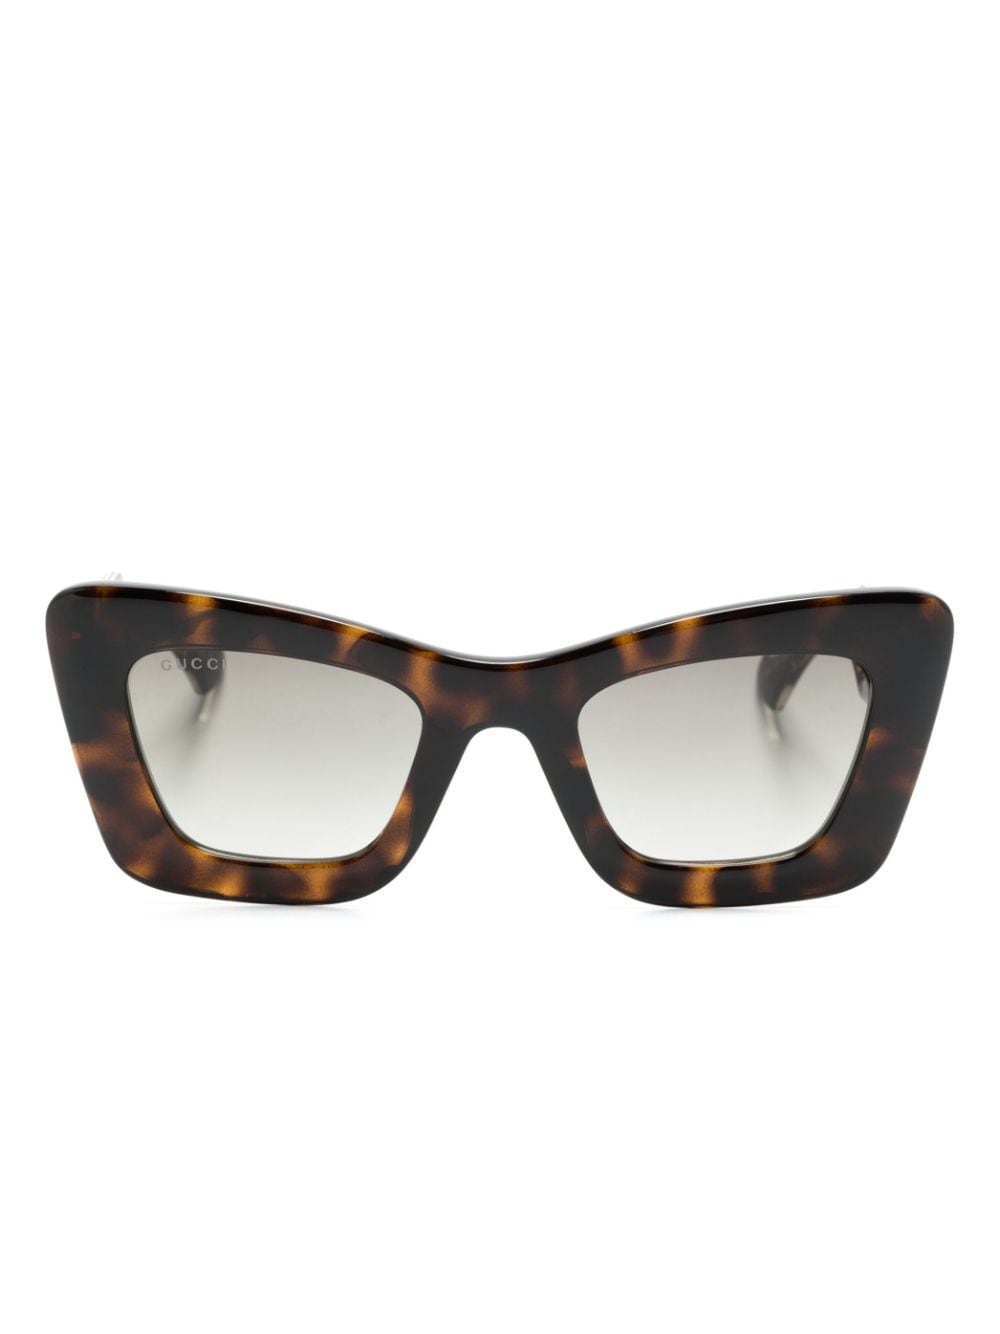 Gucci Eyewear tortoiseshell cat-eye sunglasses - Brown von Gucci Eyewear